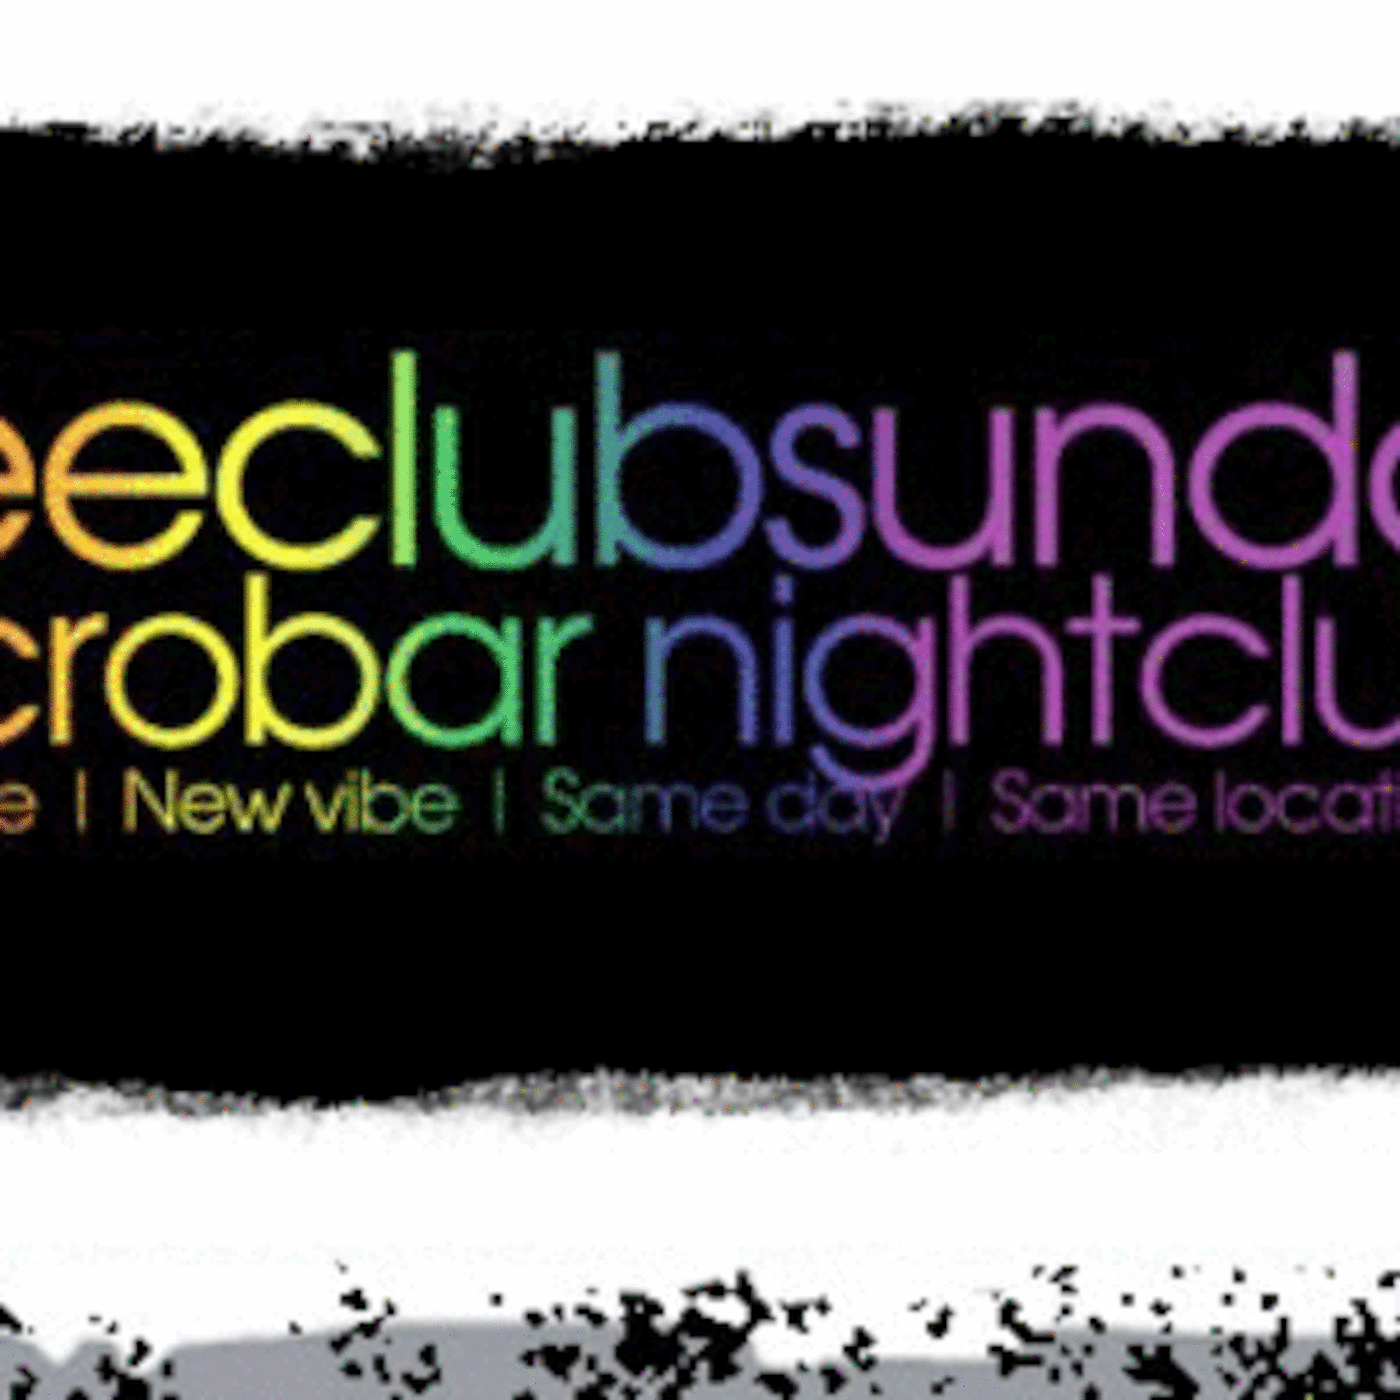 Glee Club/Crobar Sundays - 1995 (Episode 3)